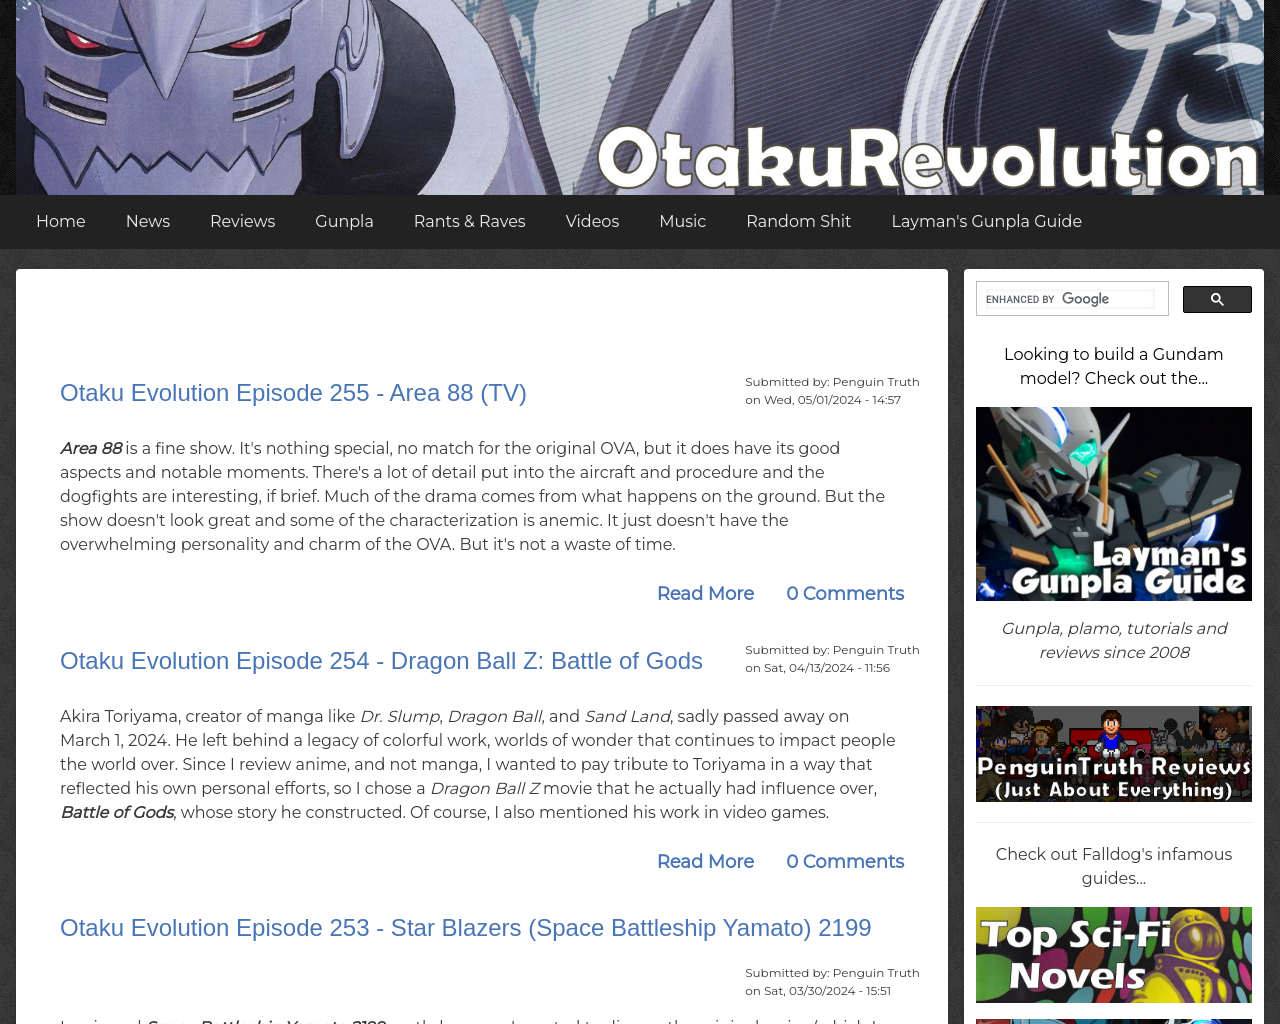 otakurevolution.com